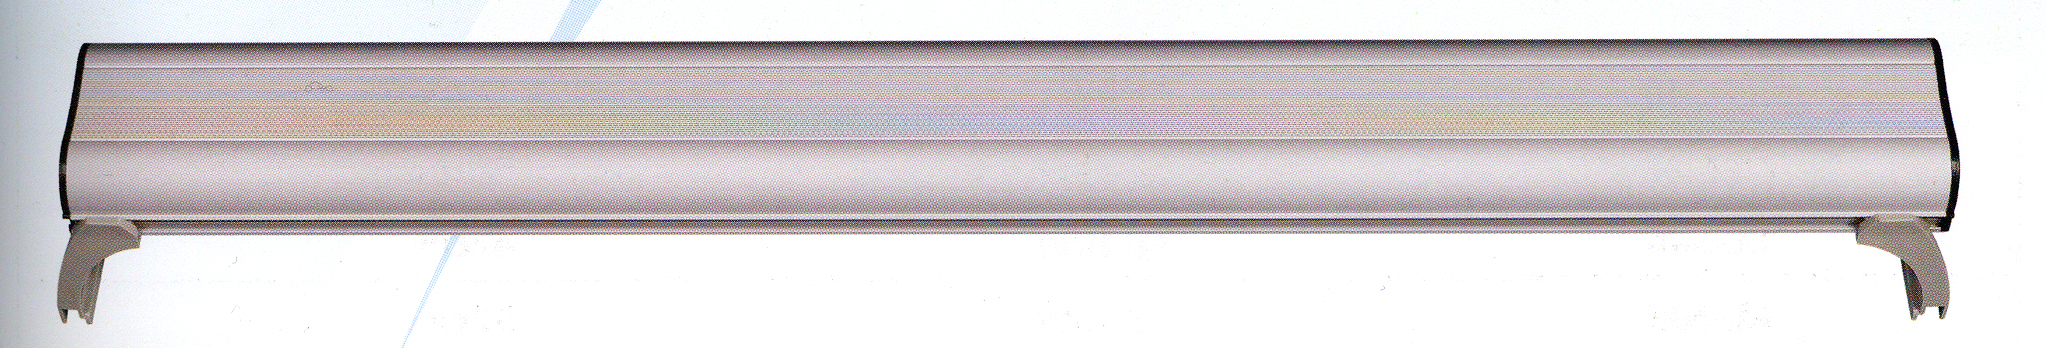 XILONG светильник T8 2х40Вт XL-150A, 147см